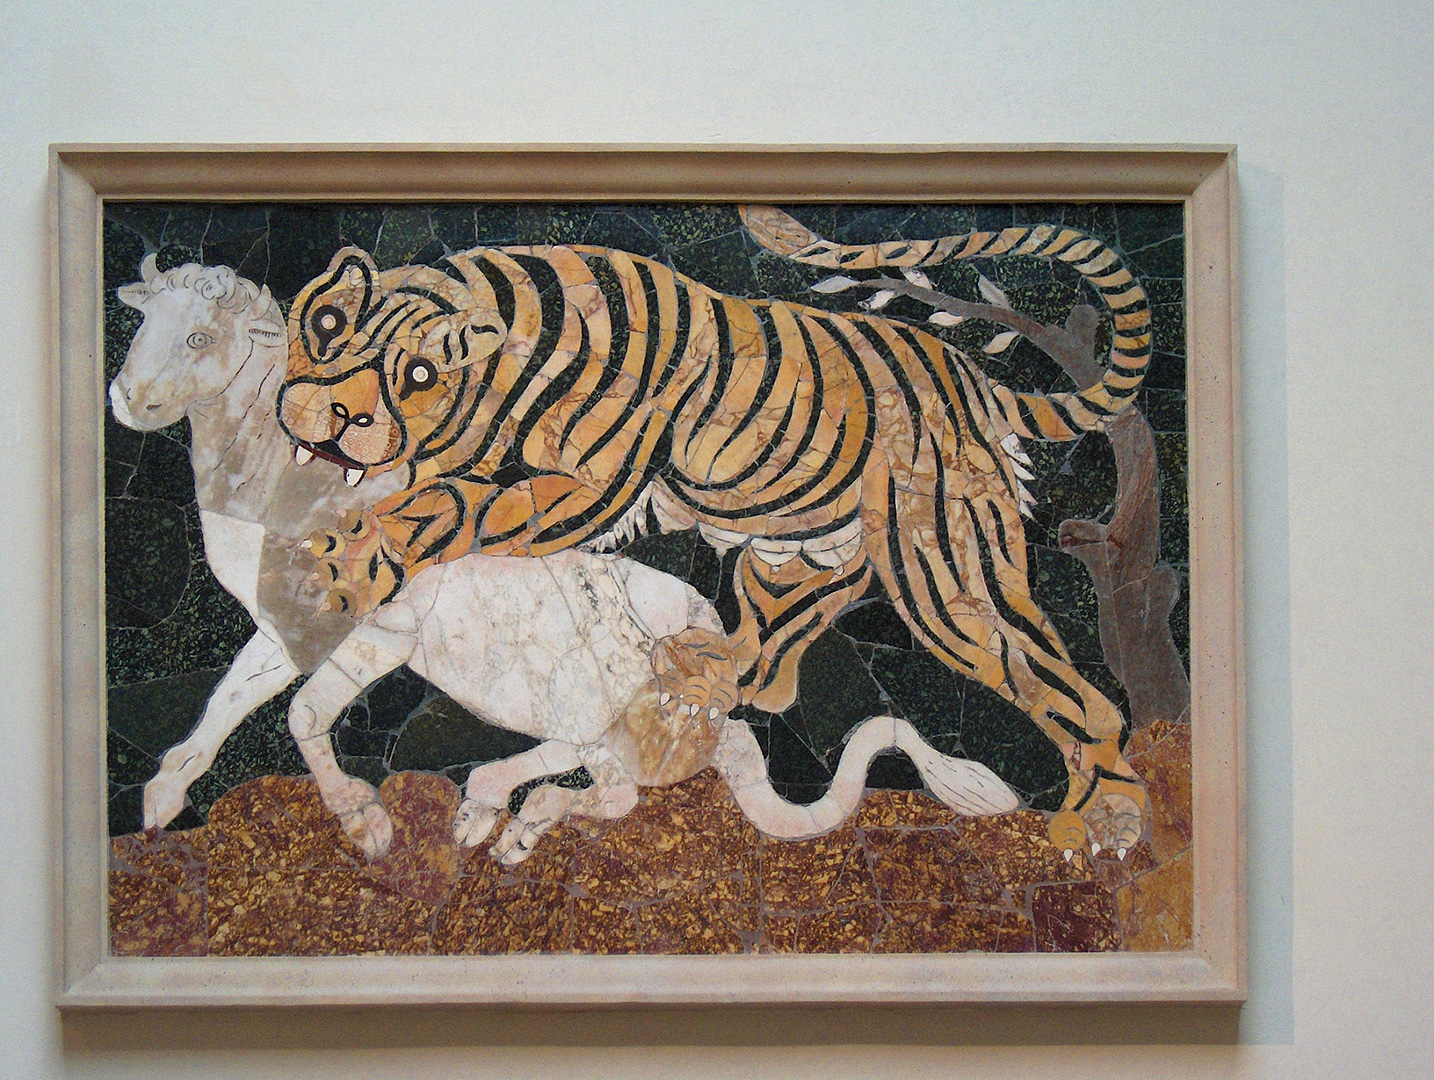 Tijger die kalf aanvalt. (Rome); Tiger attacking a calf.